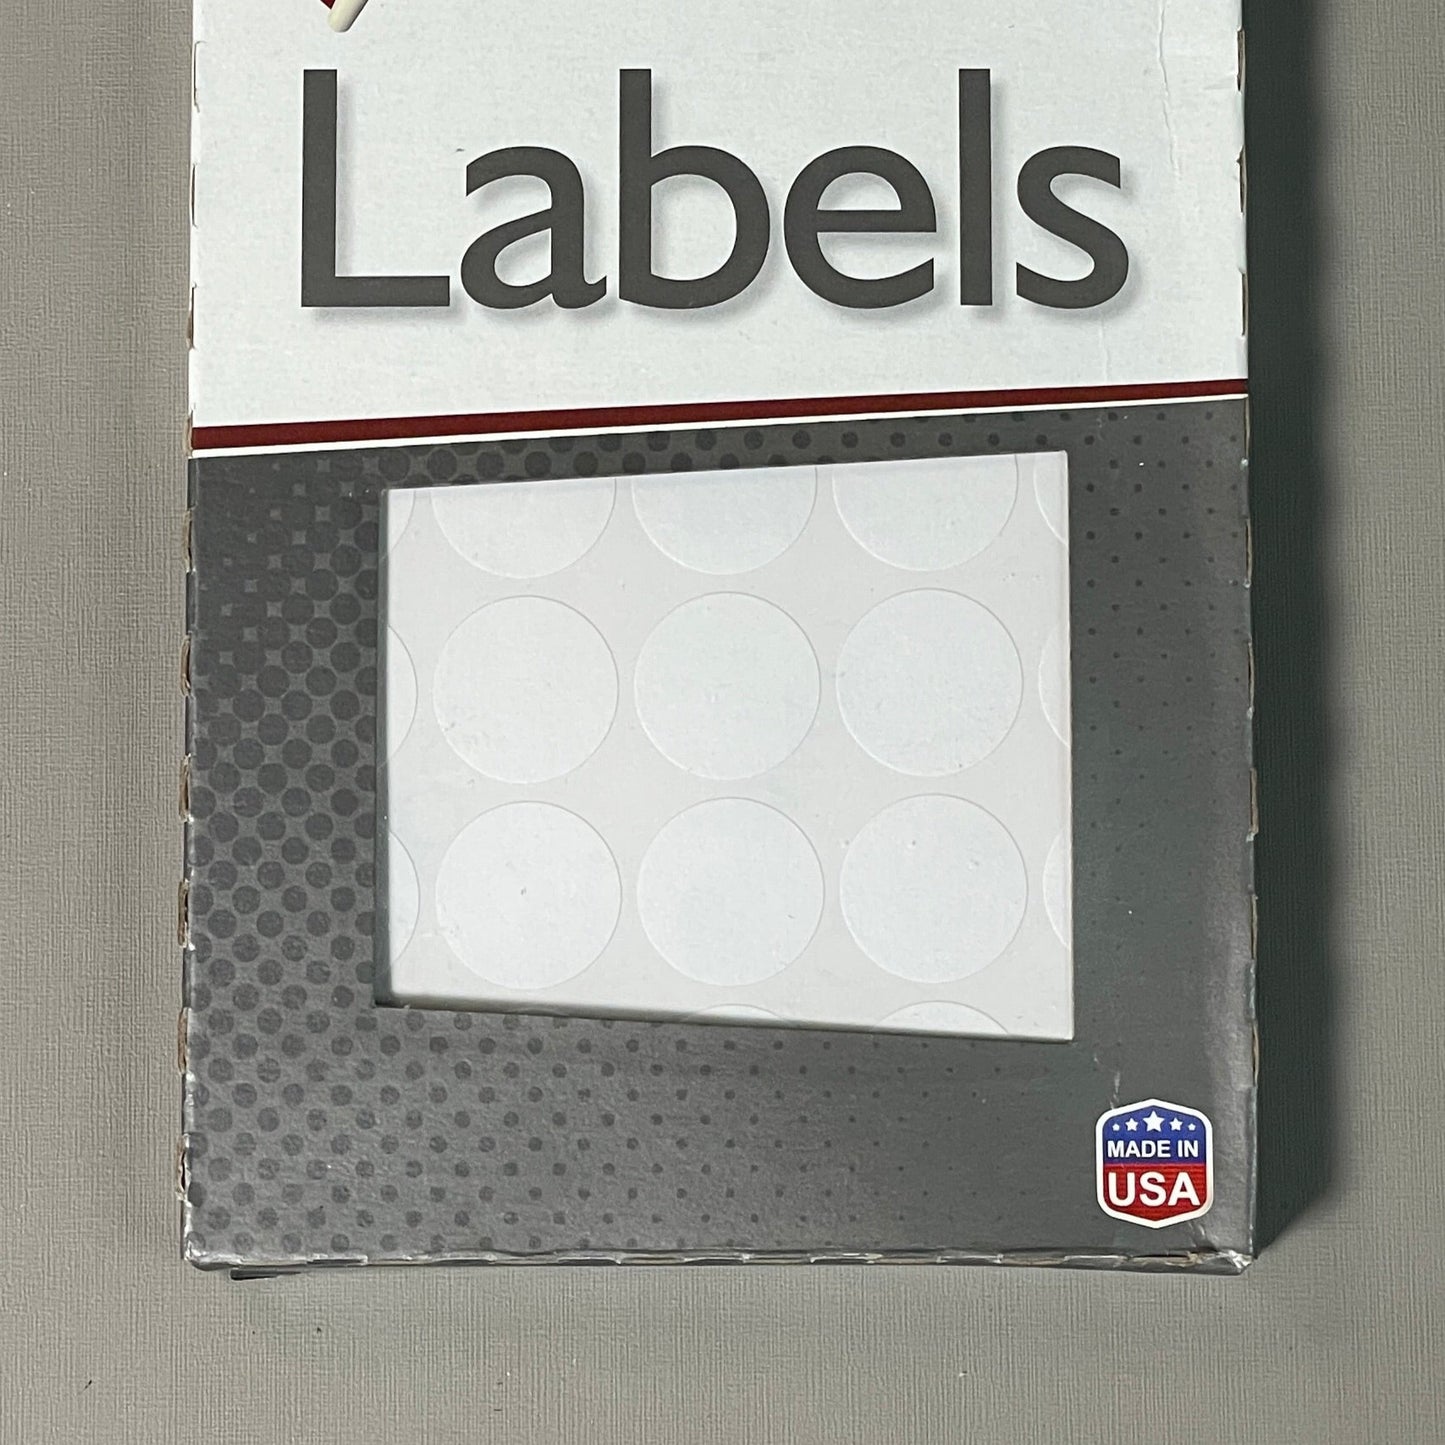 MACO Round WHITE Color-Coding Labels / Dots 3/4” Dia. 1000 Labels MR-1212